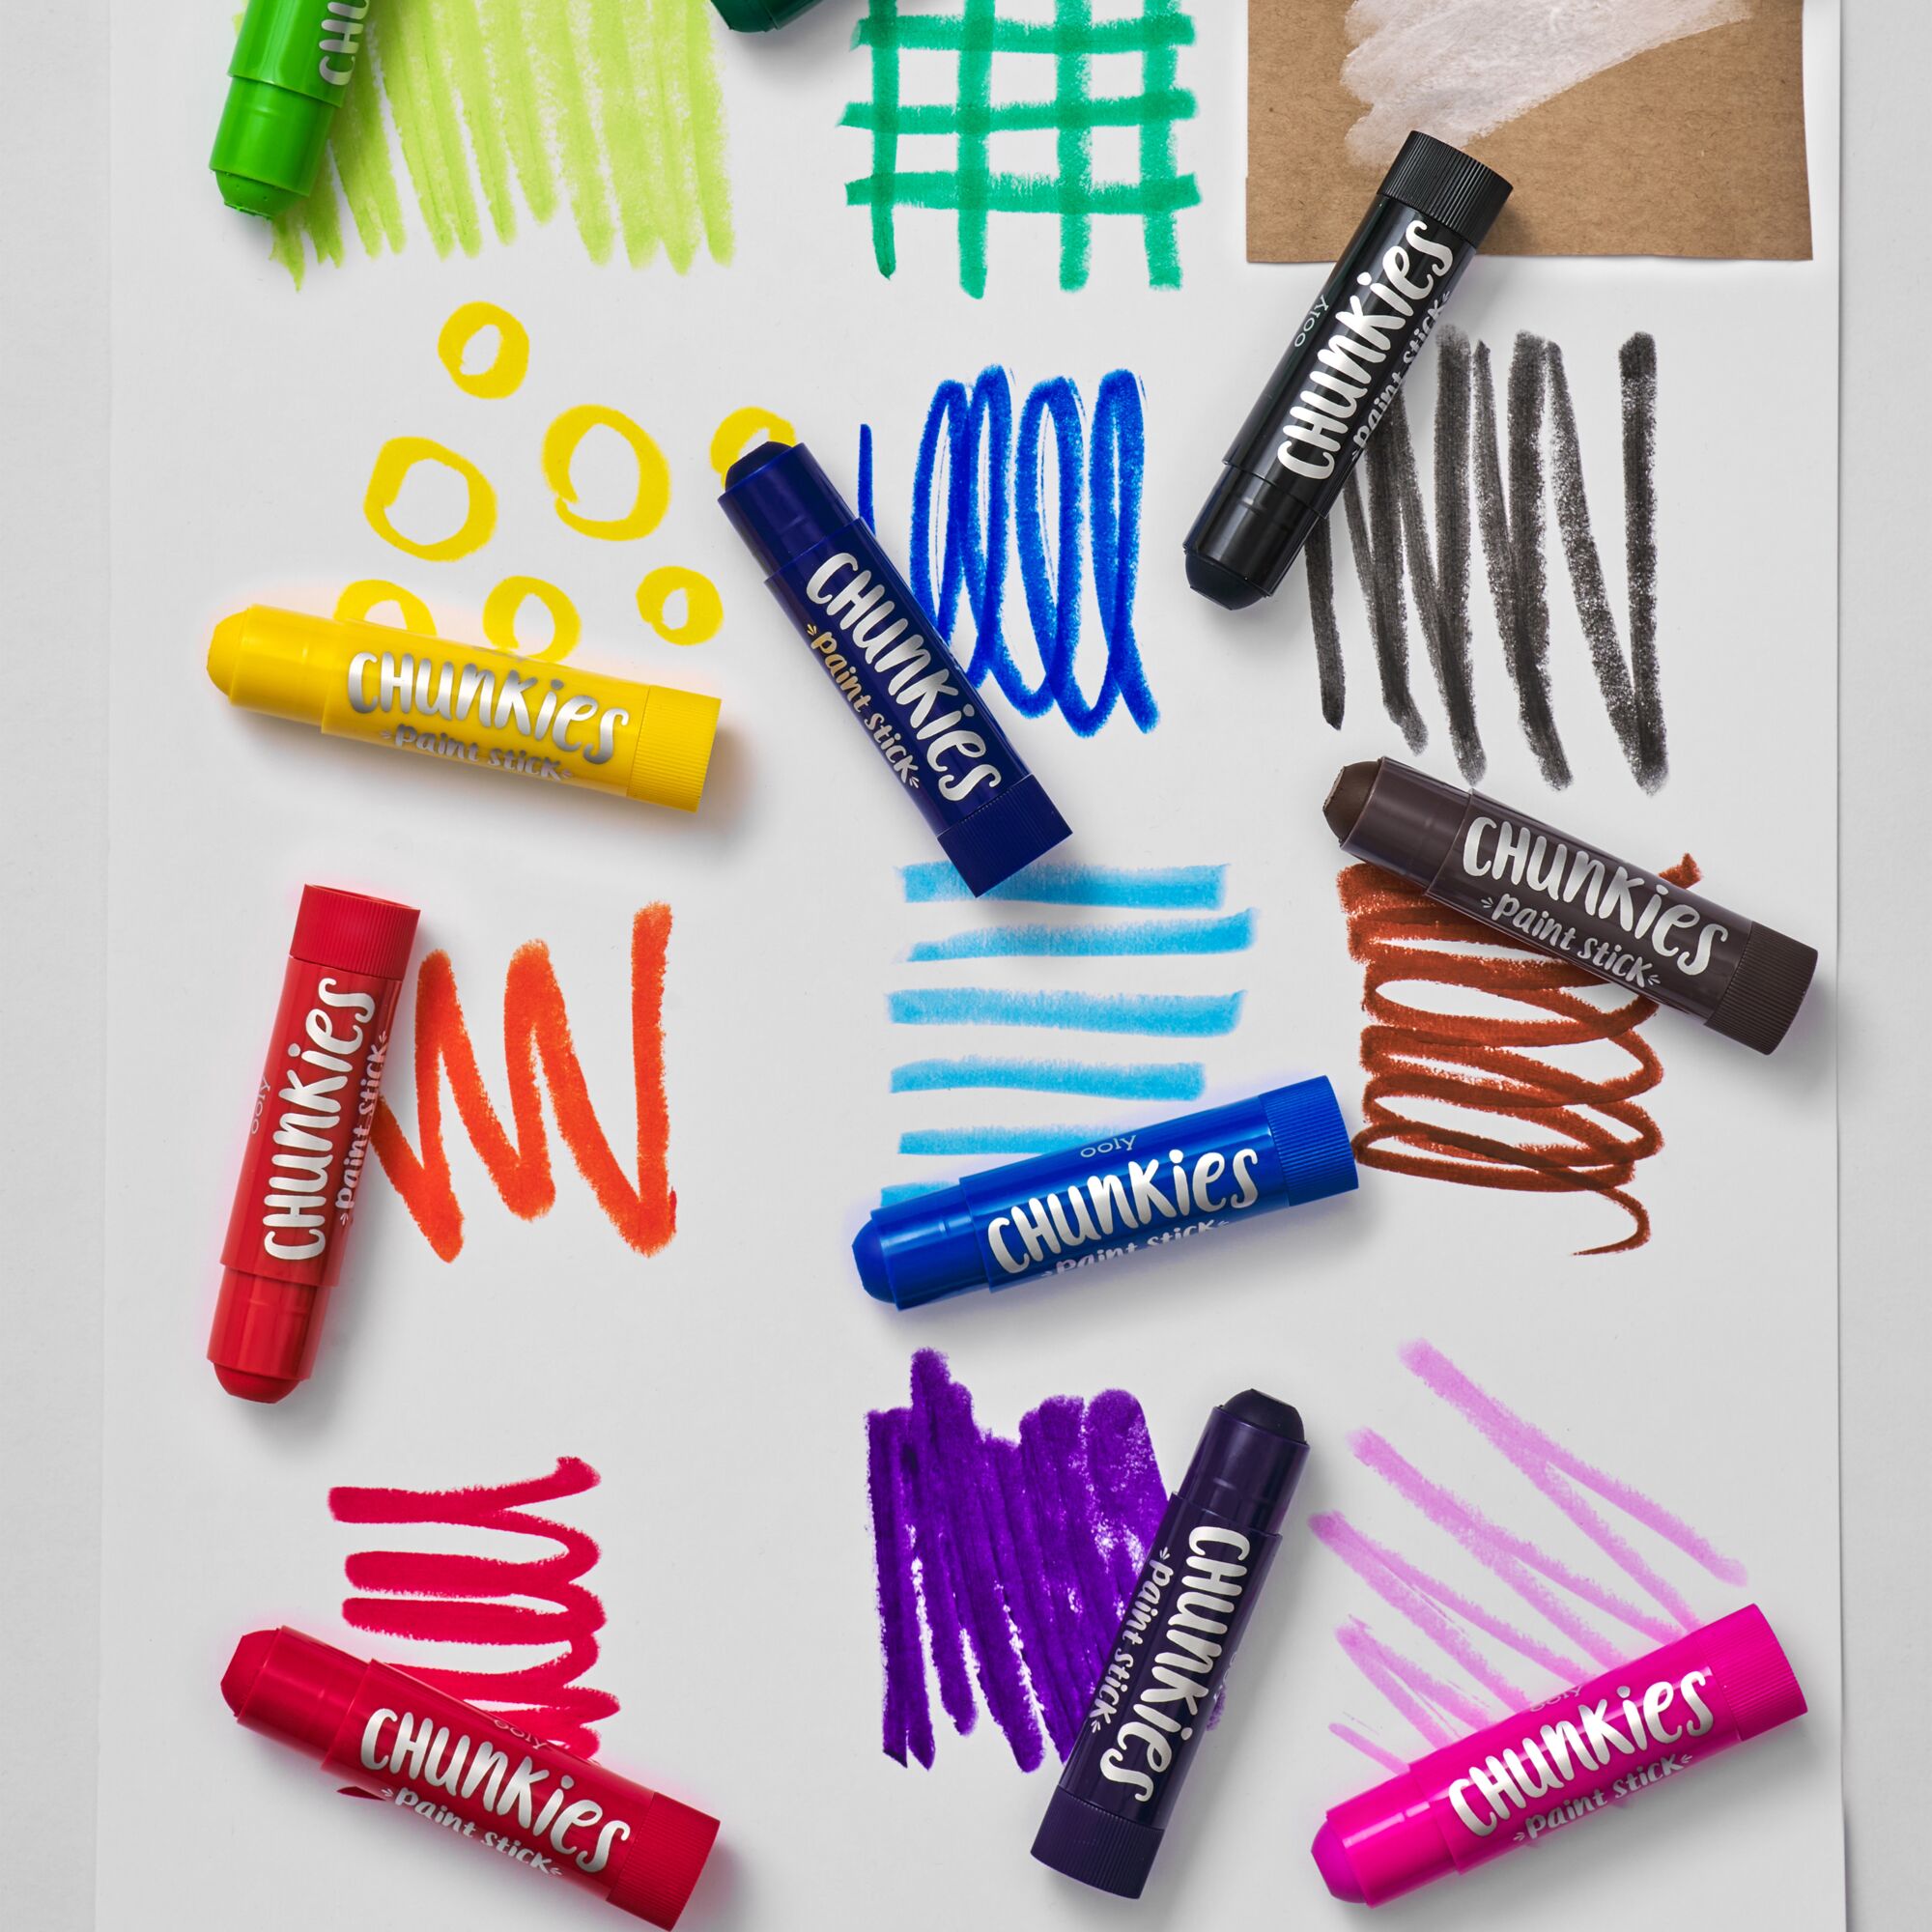 Chunkies Paint Sticks Neon – Ali Cat Toys